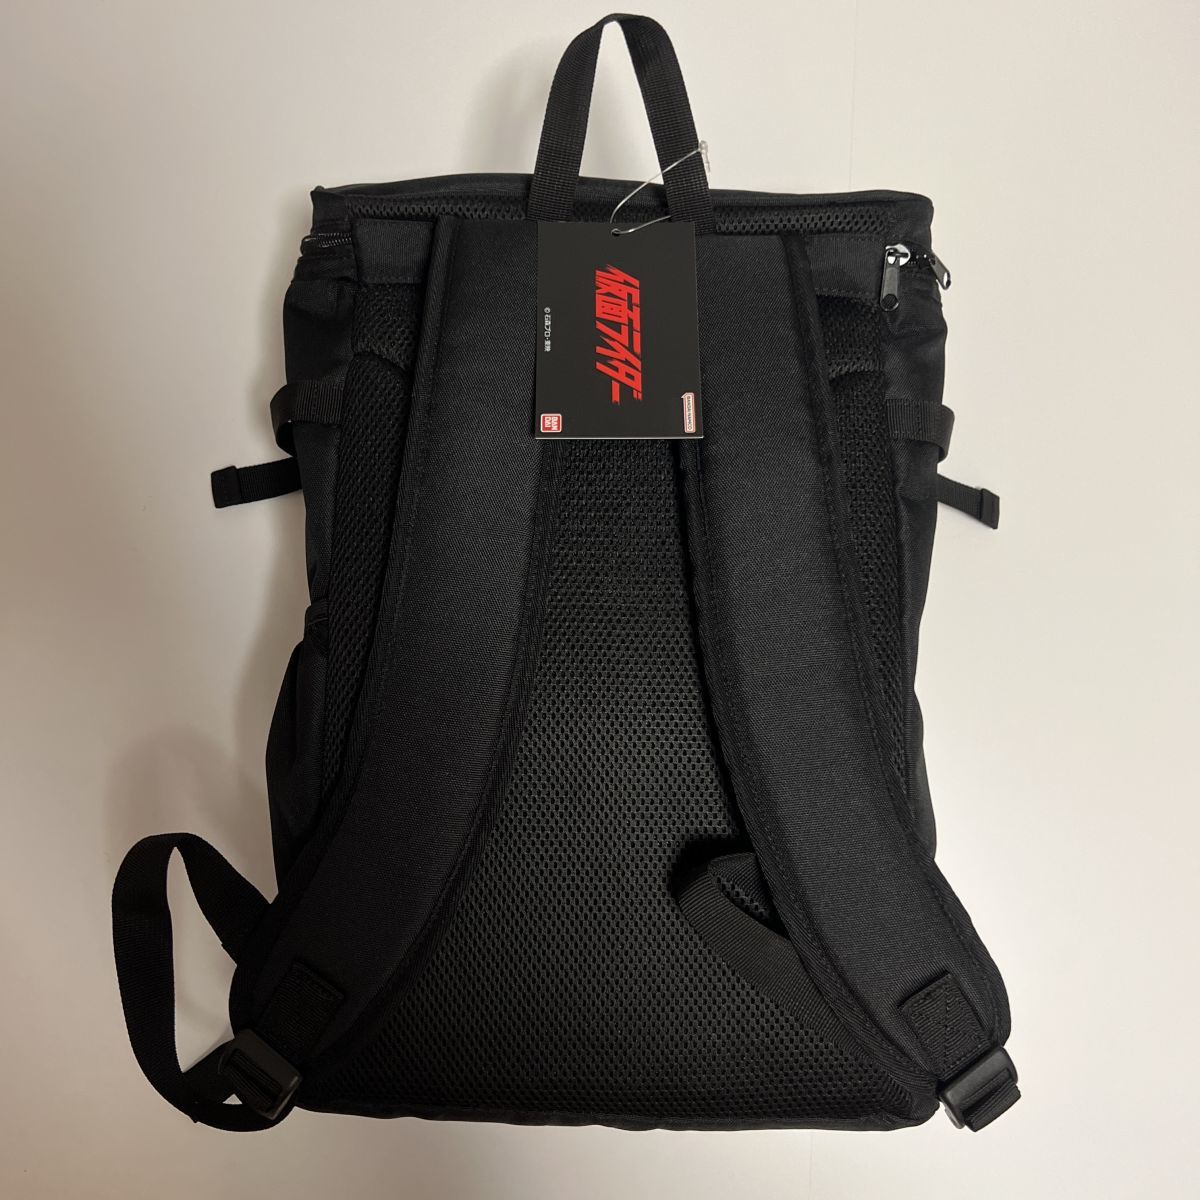 *BANDAI Bandai Kamen Rider ultra rare new goods men's backpack rucksack bag BAG black [2654656F] one six *QWER*